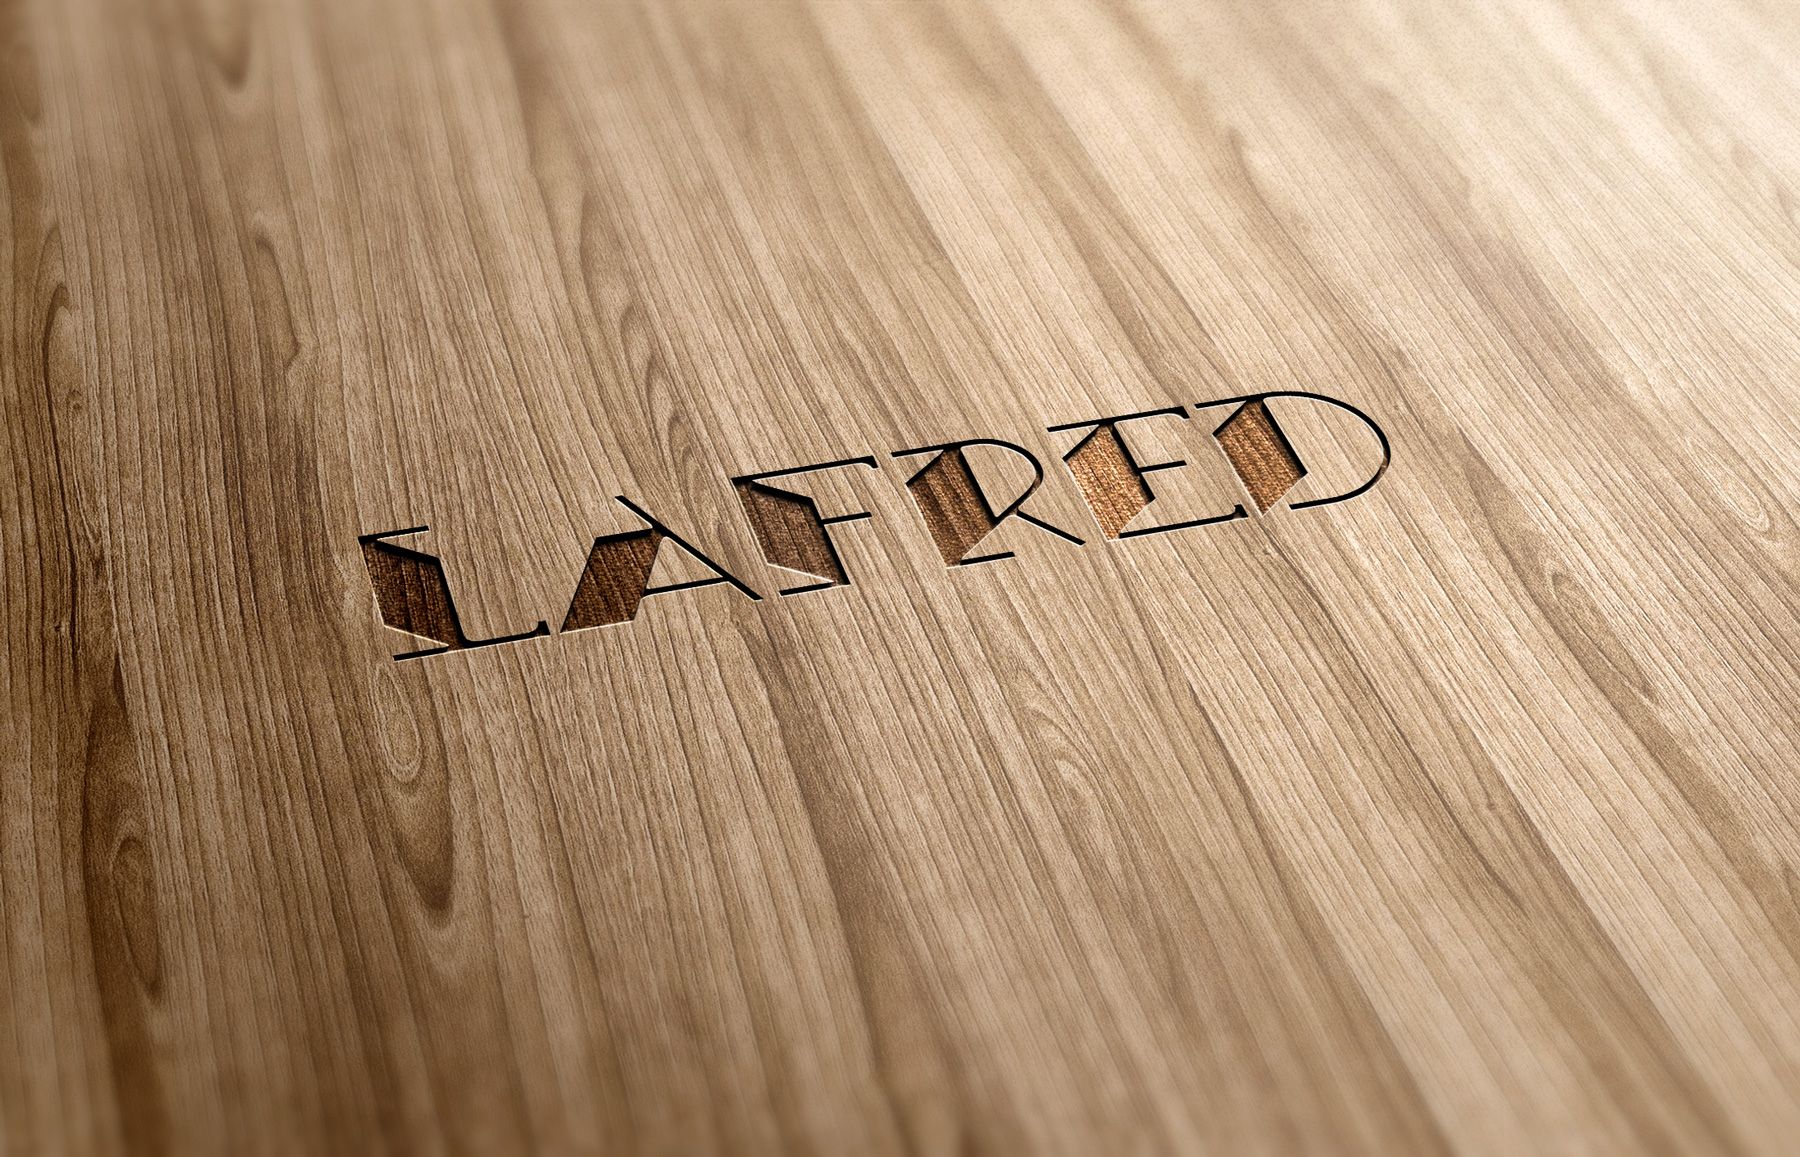 Логотип для Lafred - дизайнер Ninpo